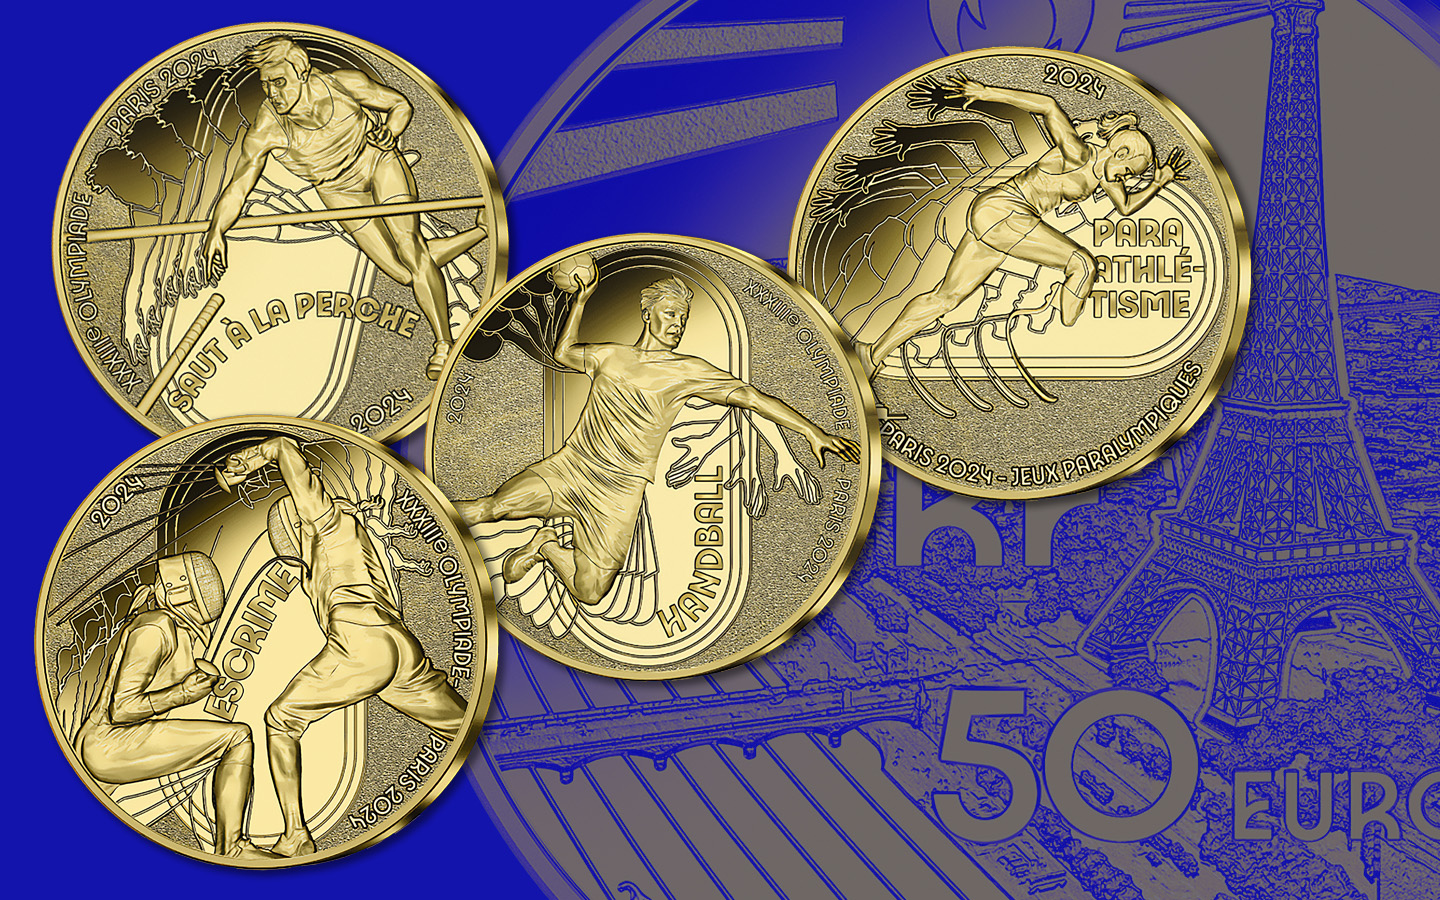 Paris 2024 Olympics Coins